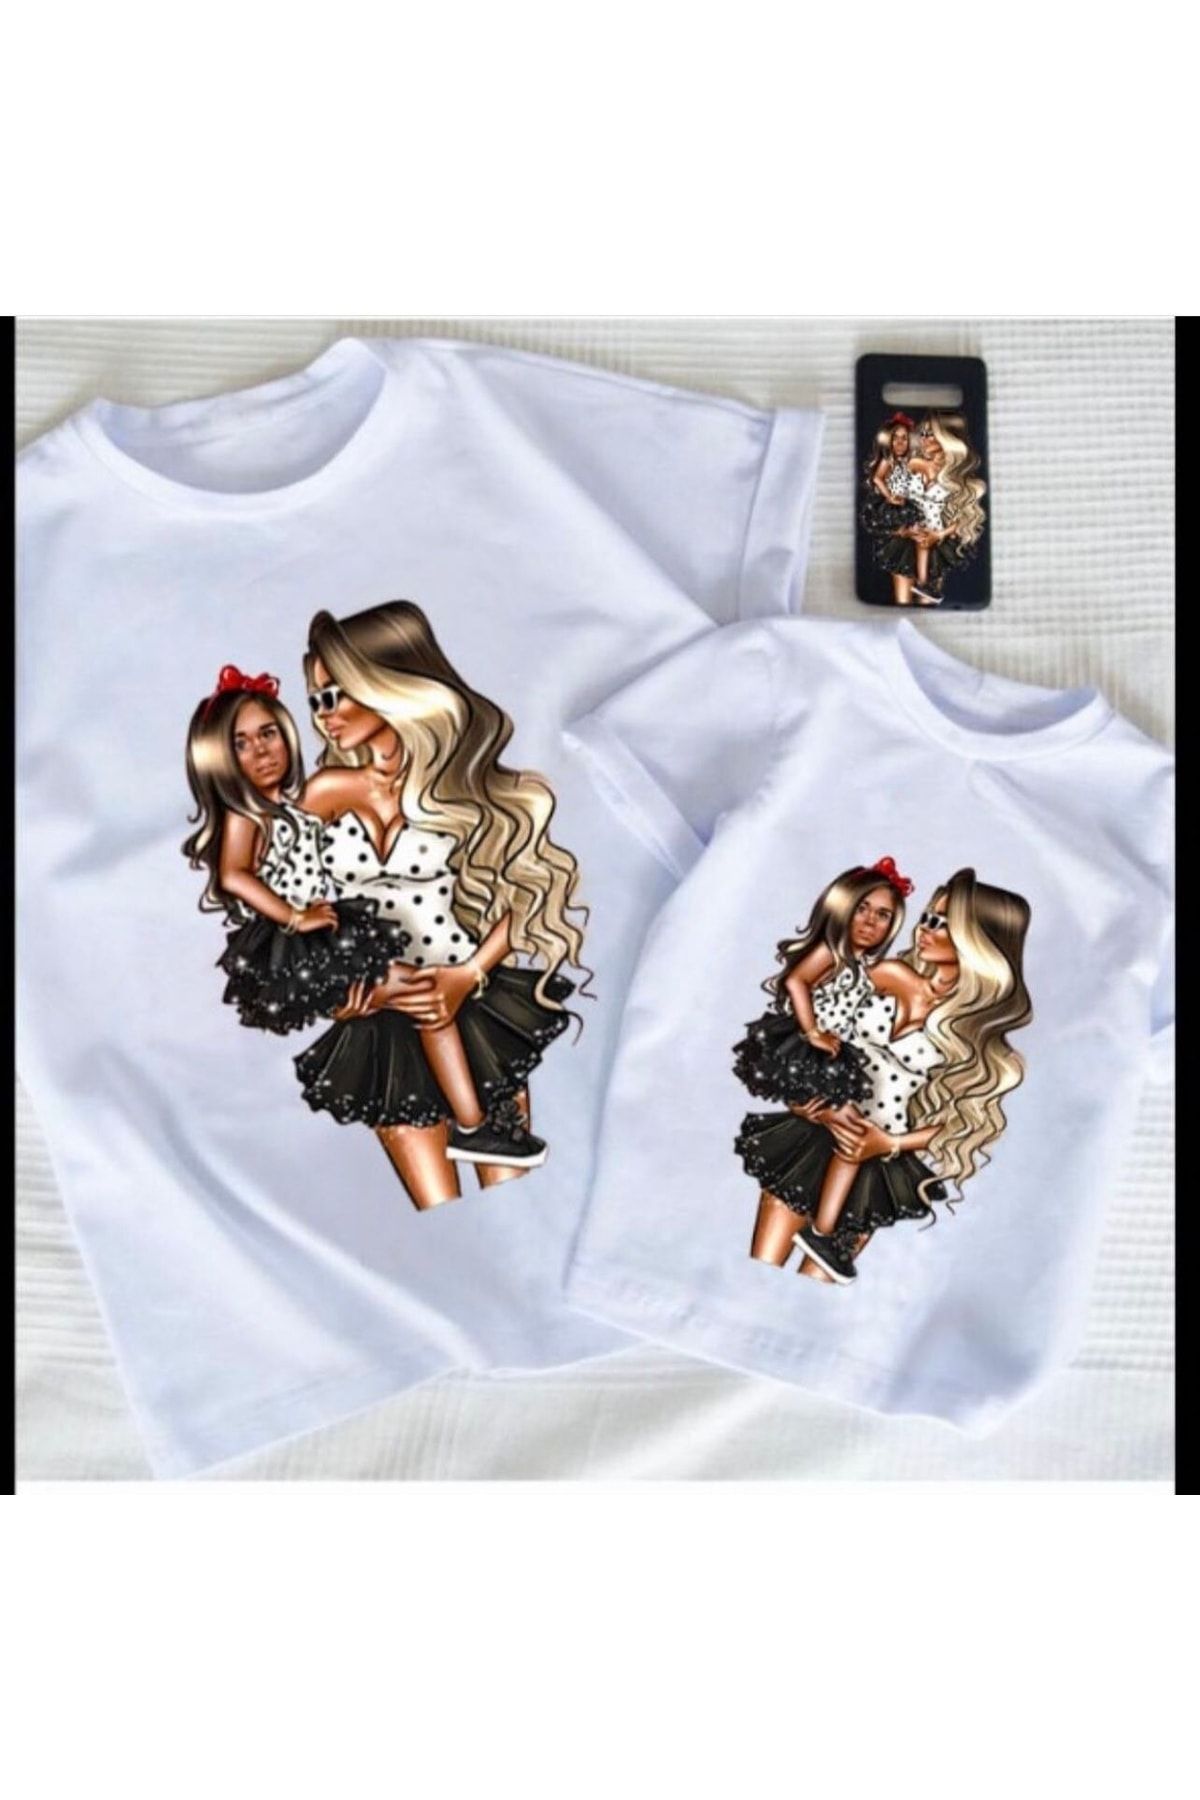 Anne ve Yavru Ceylan Temalı Çocuk T-shirt - Astral Baby